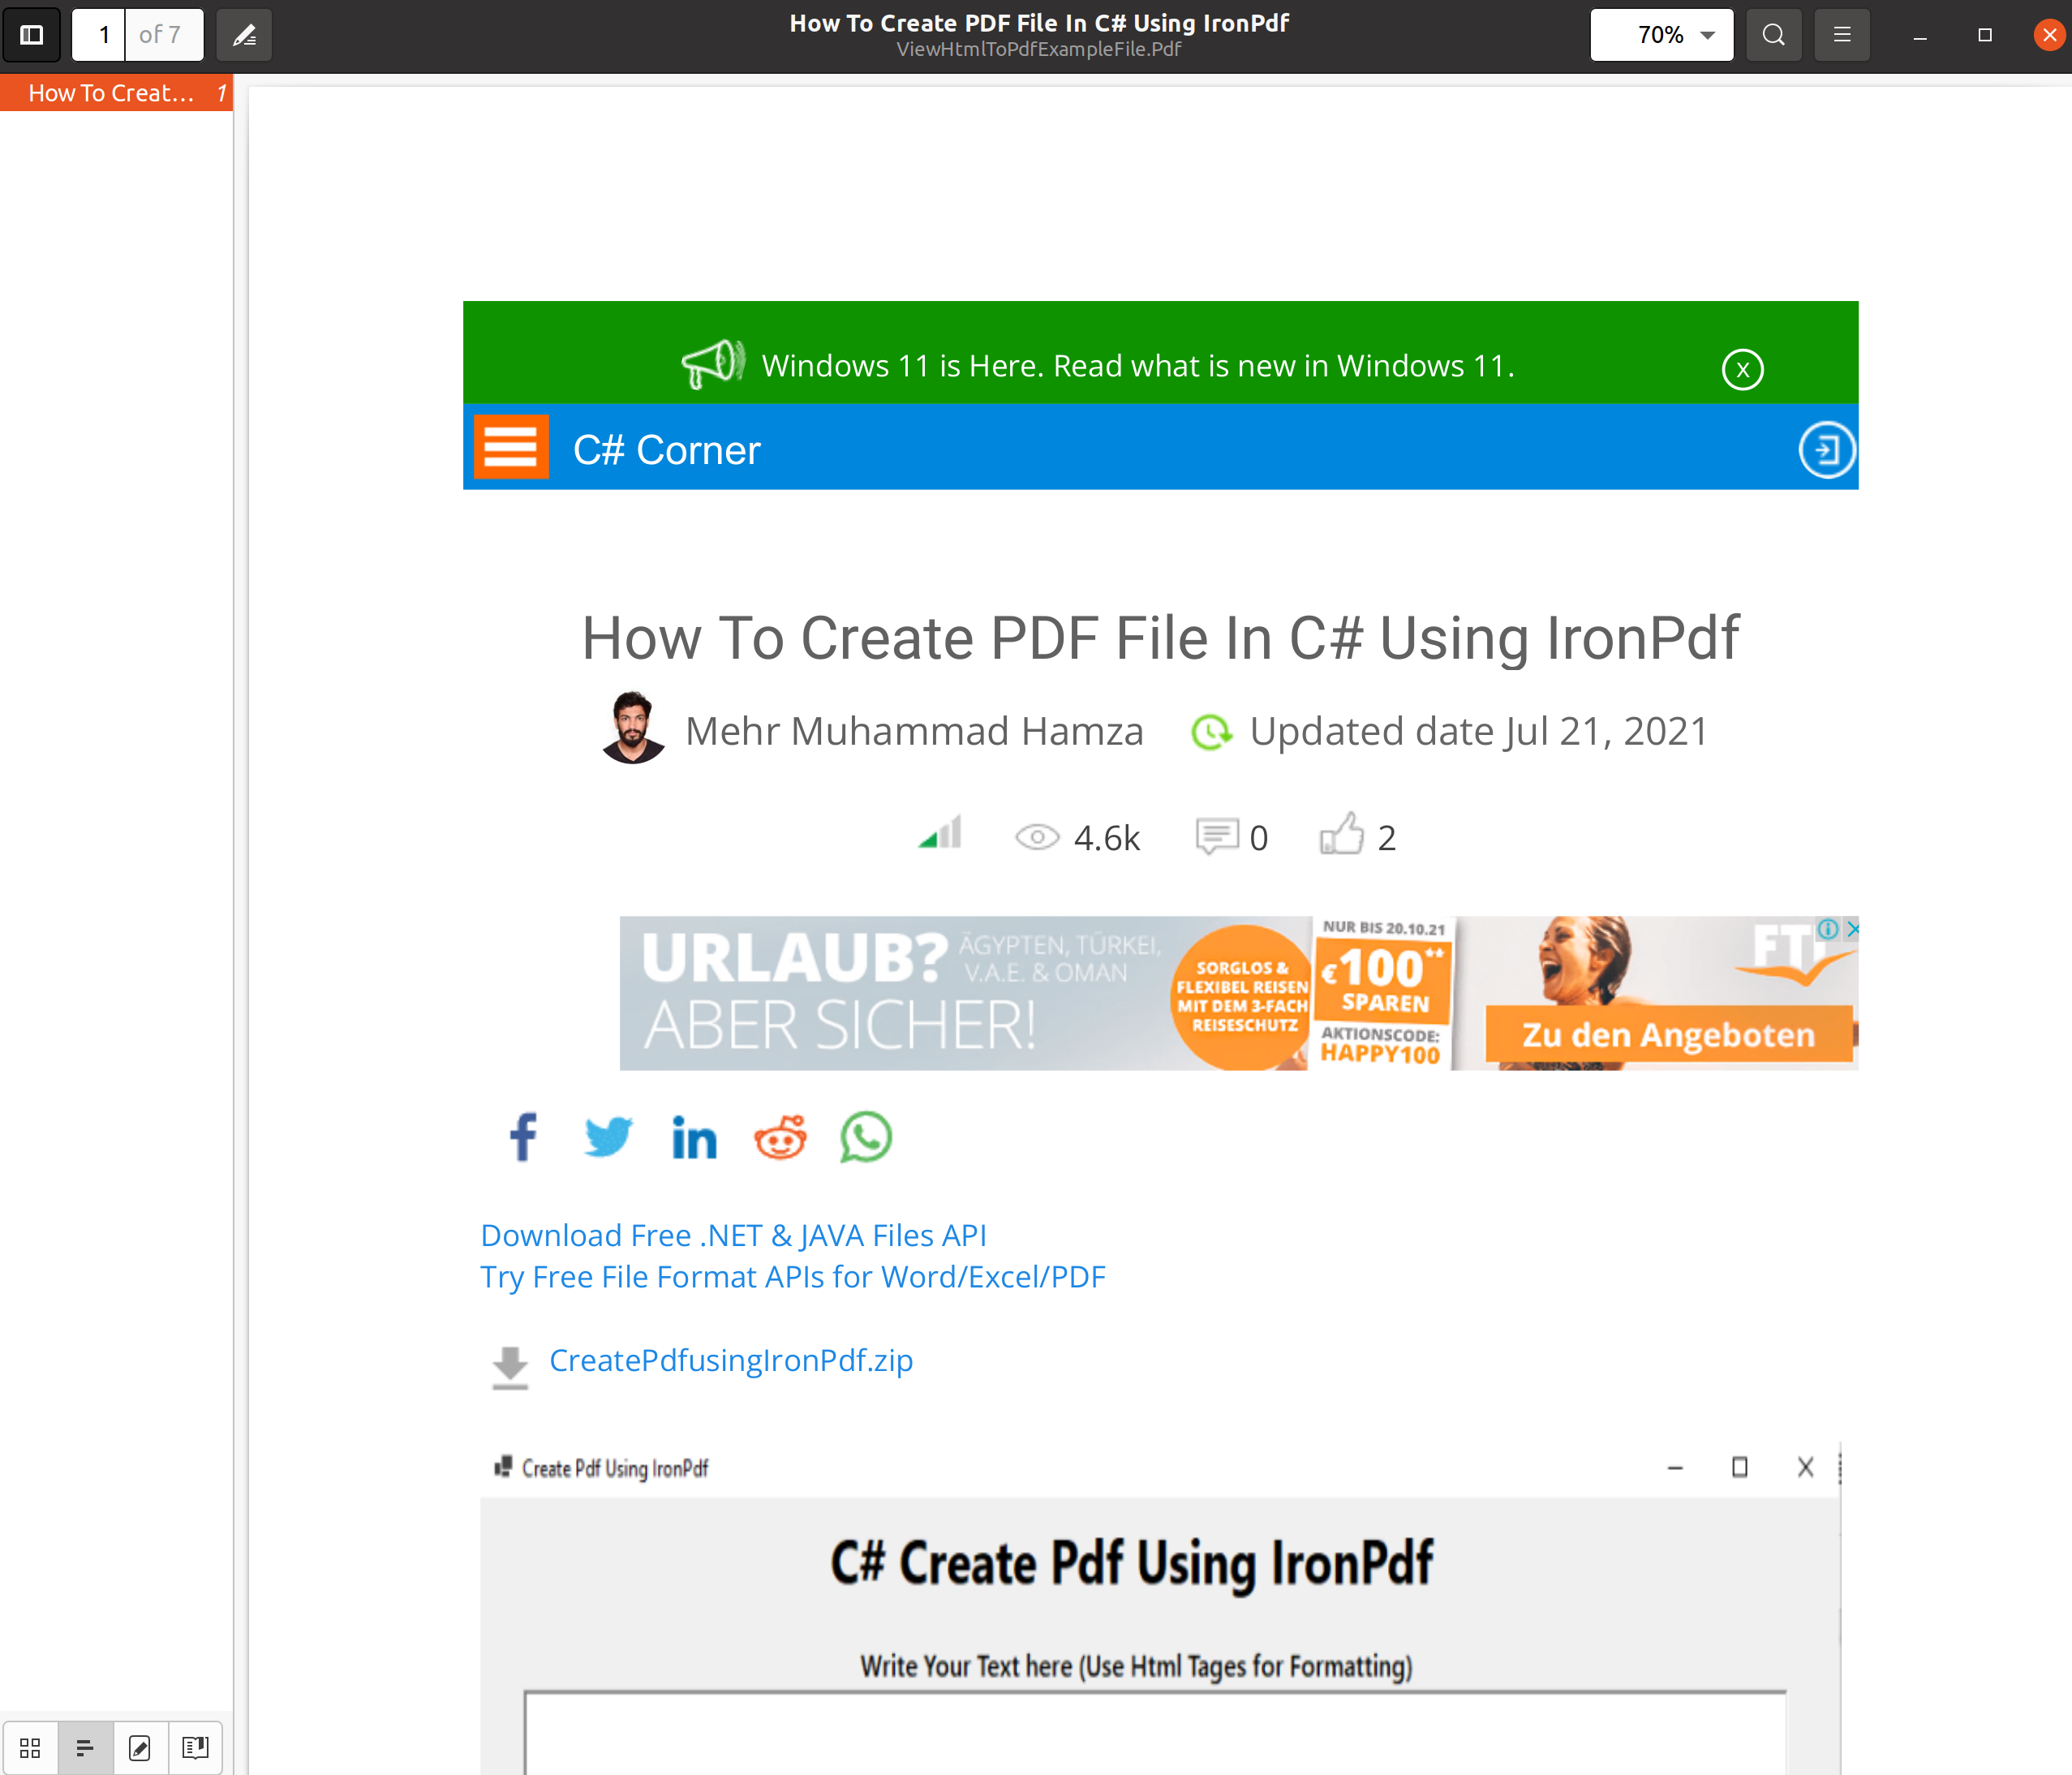 C# Create PDF (Code Example Tutorial), Figure 14: CSharp Create PDF